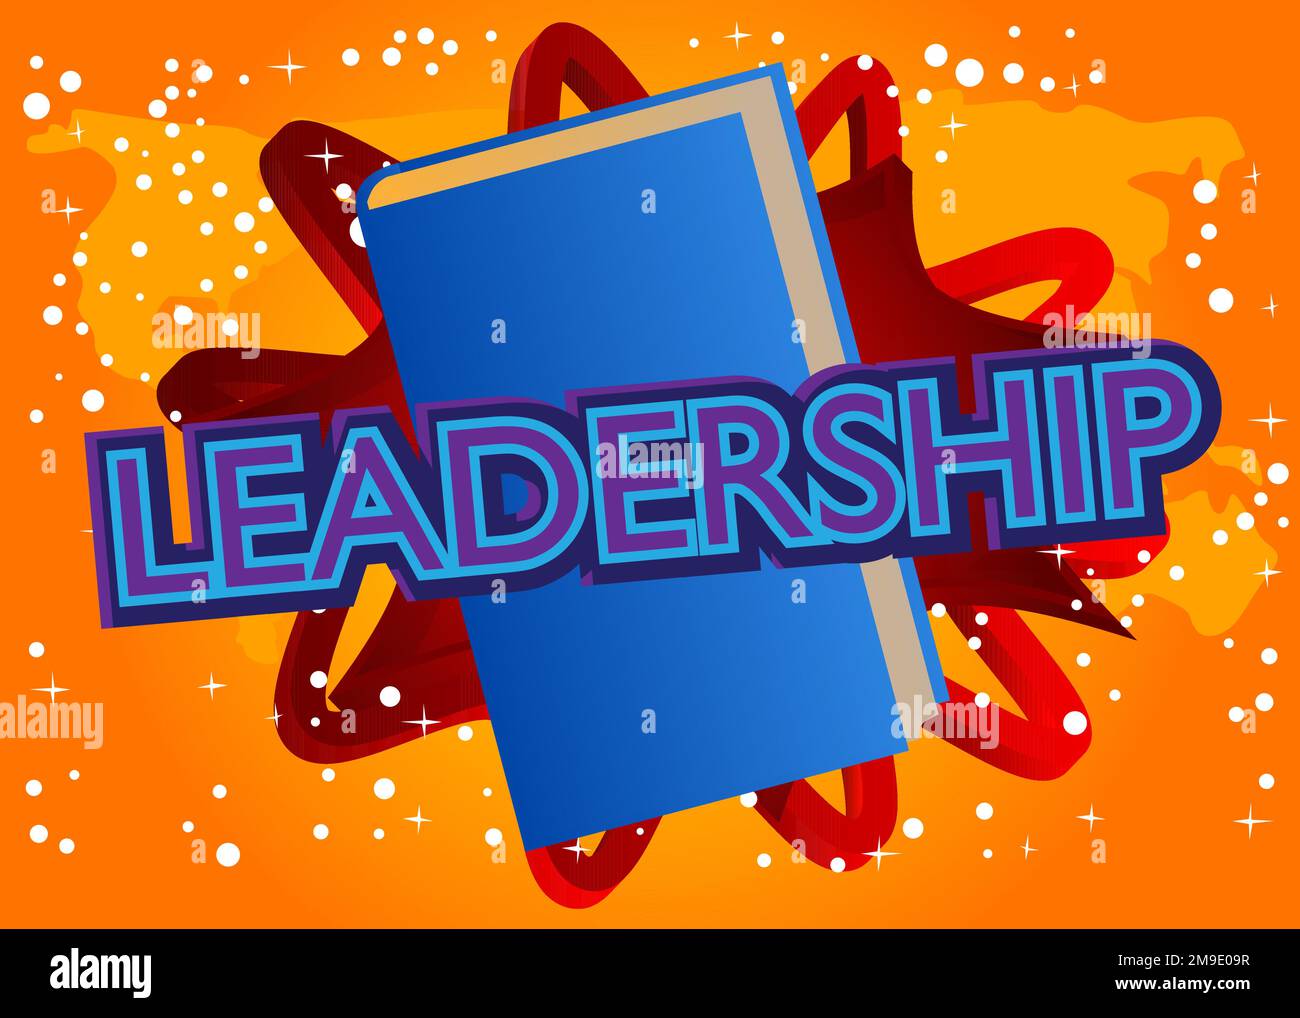 Leadership word on a book, cartoon vector illustration. Stock Vector